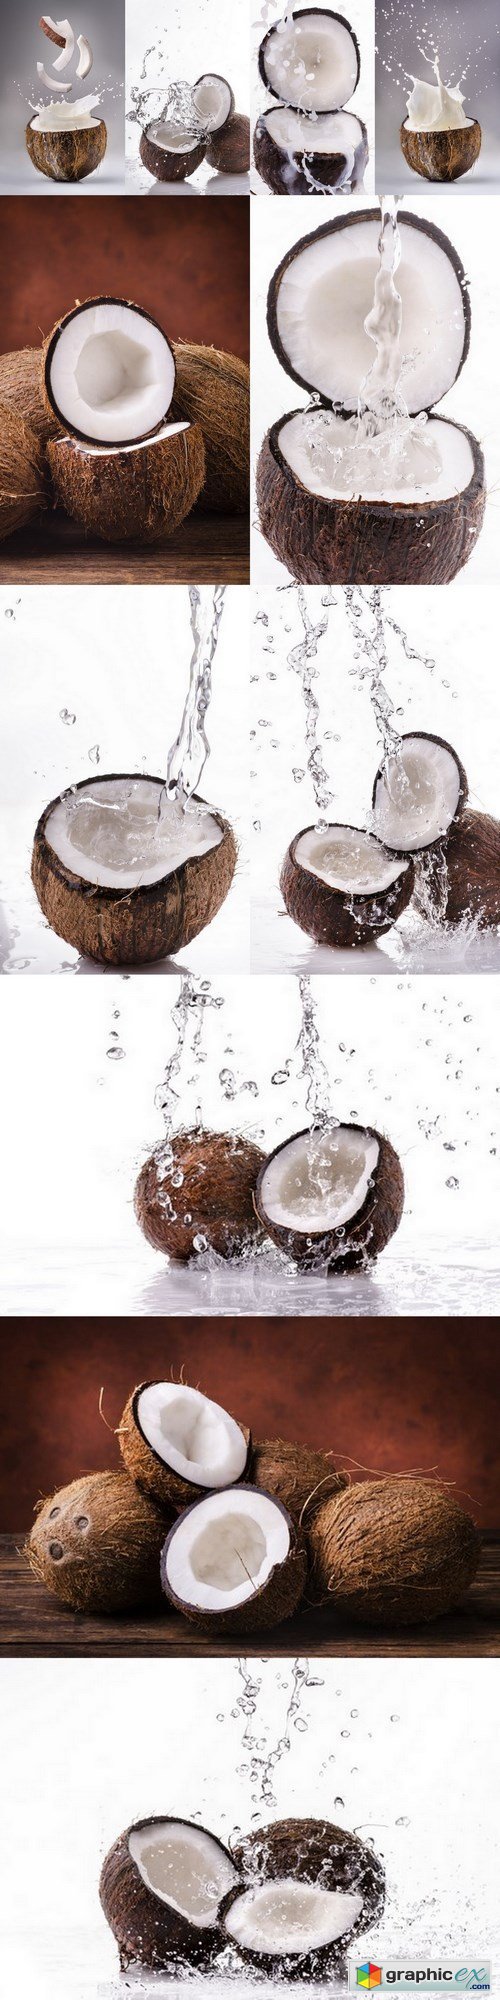 Coconut - 11 UHQ JPEG